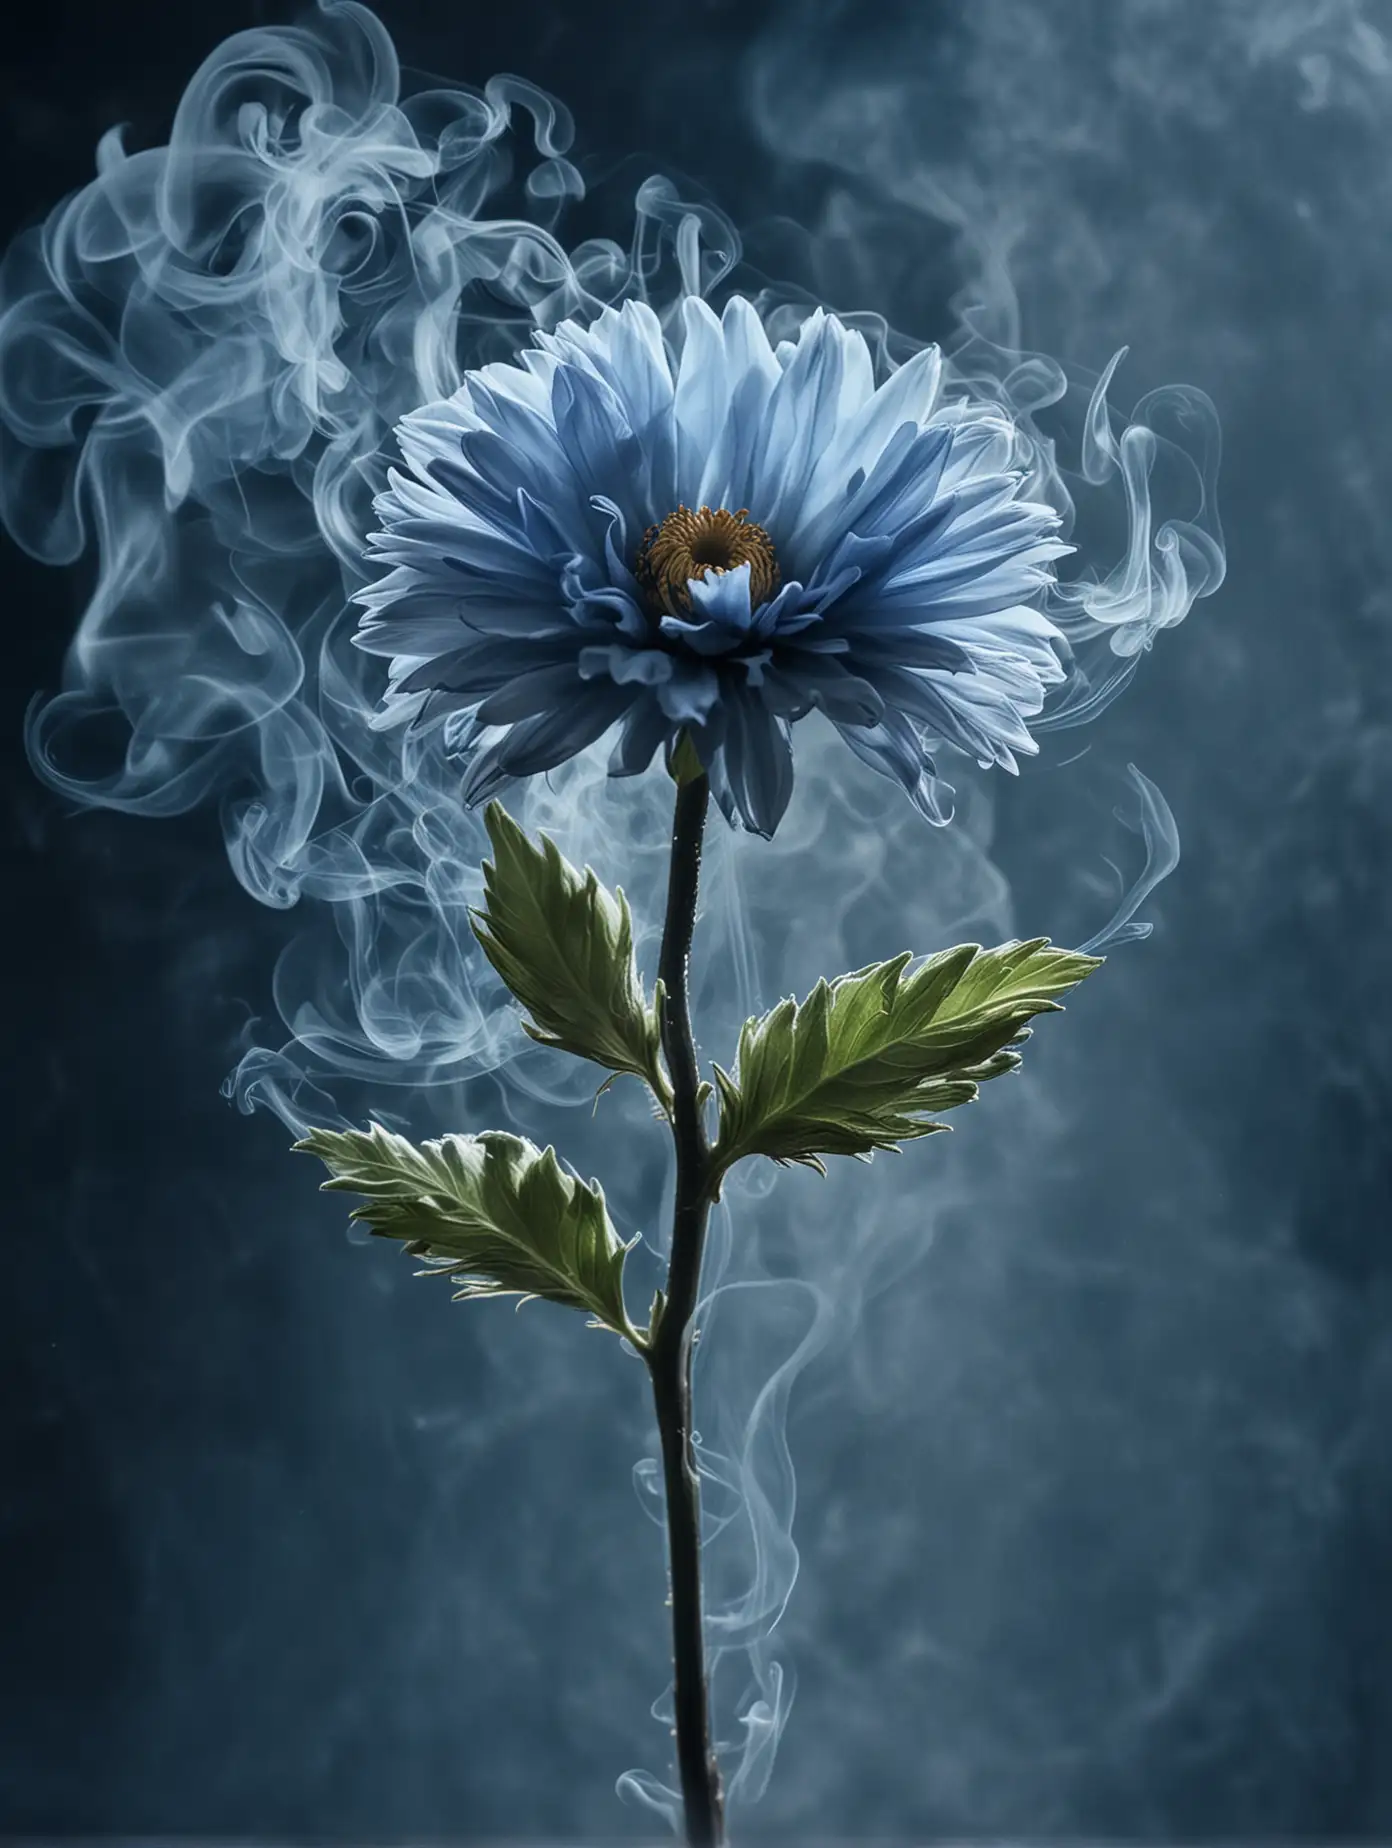 Blue Smoke Surrounding a Blossoming Flower